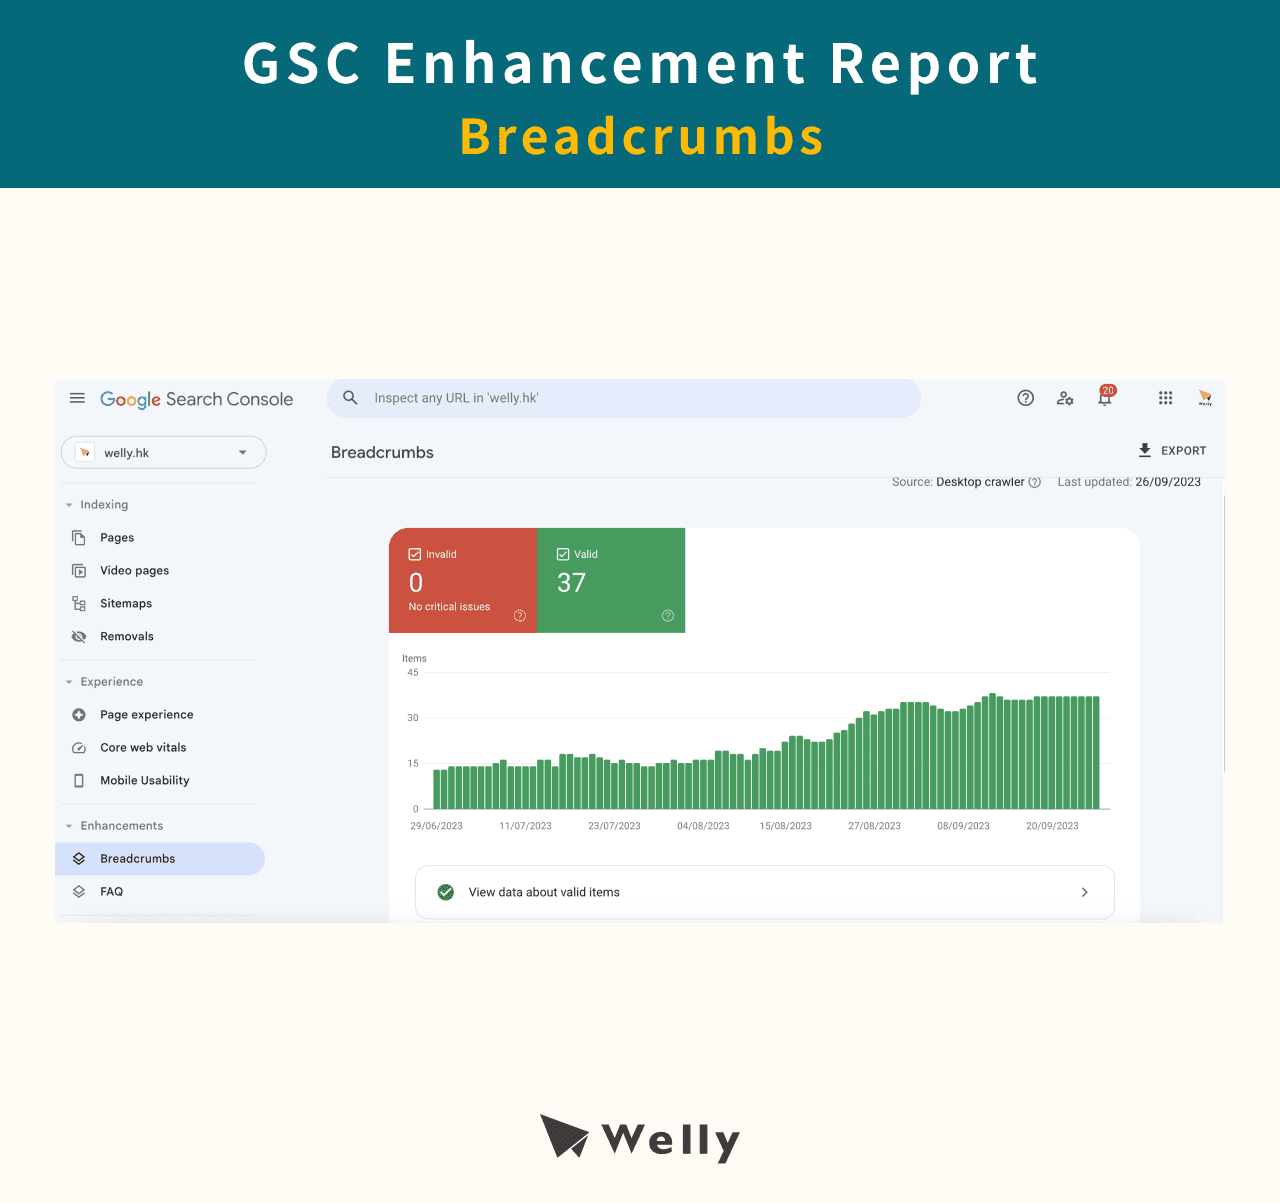 gsc enhancements report